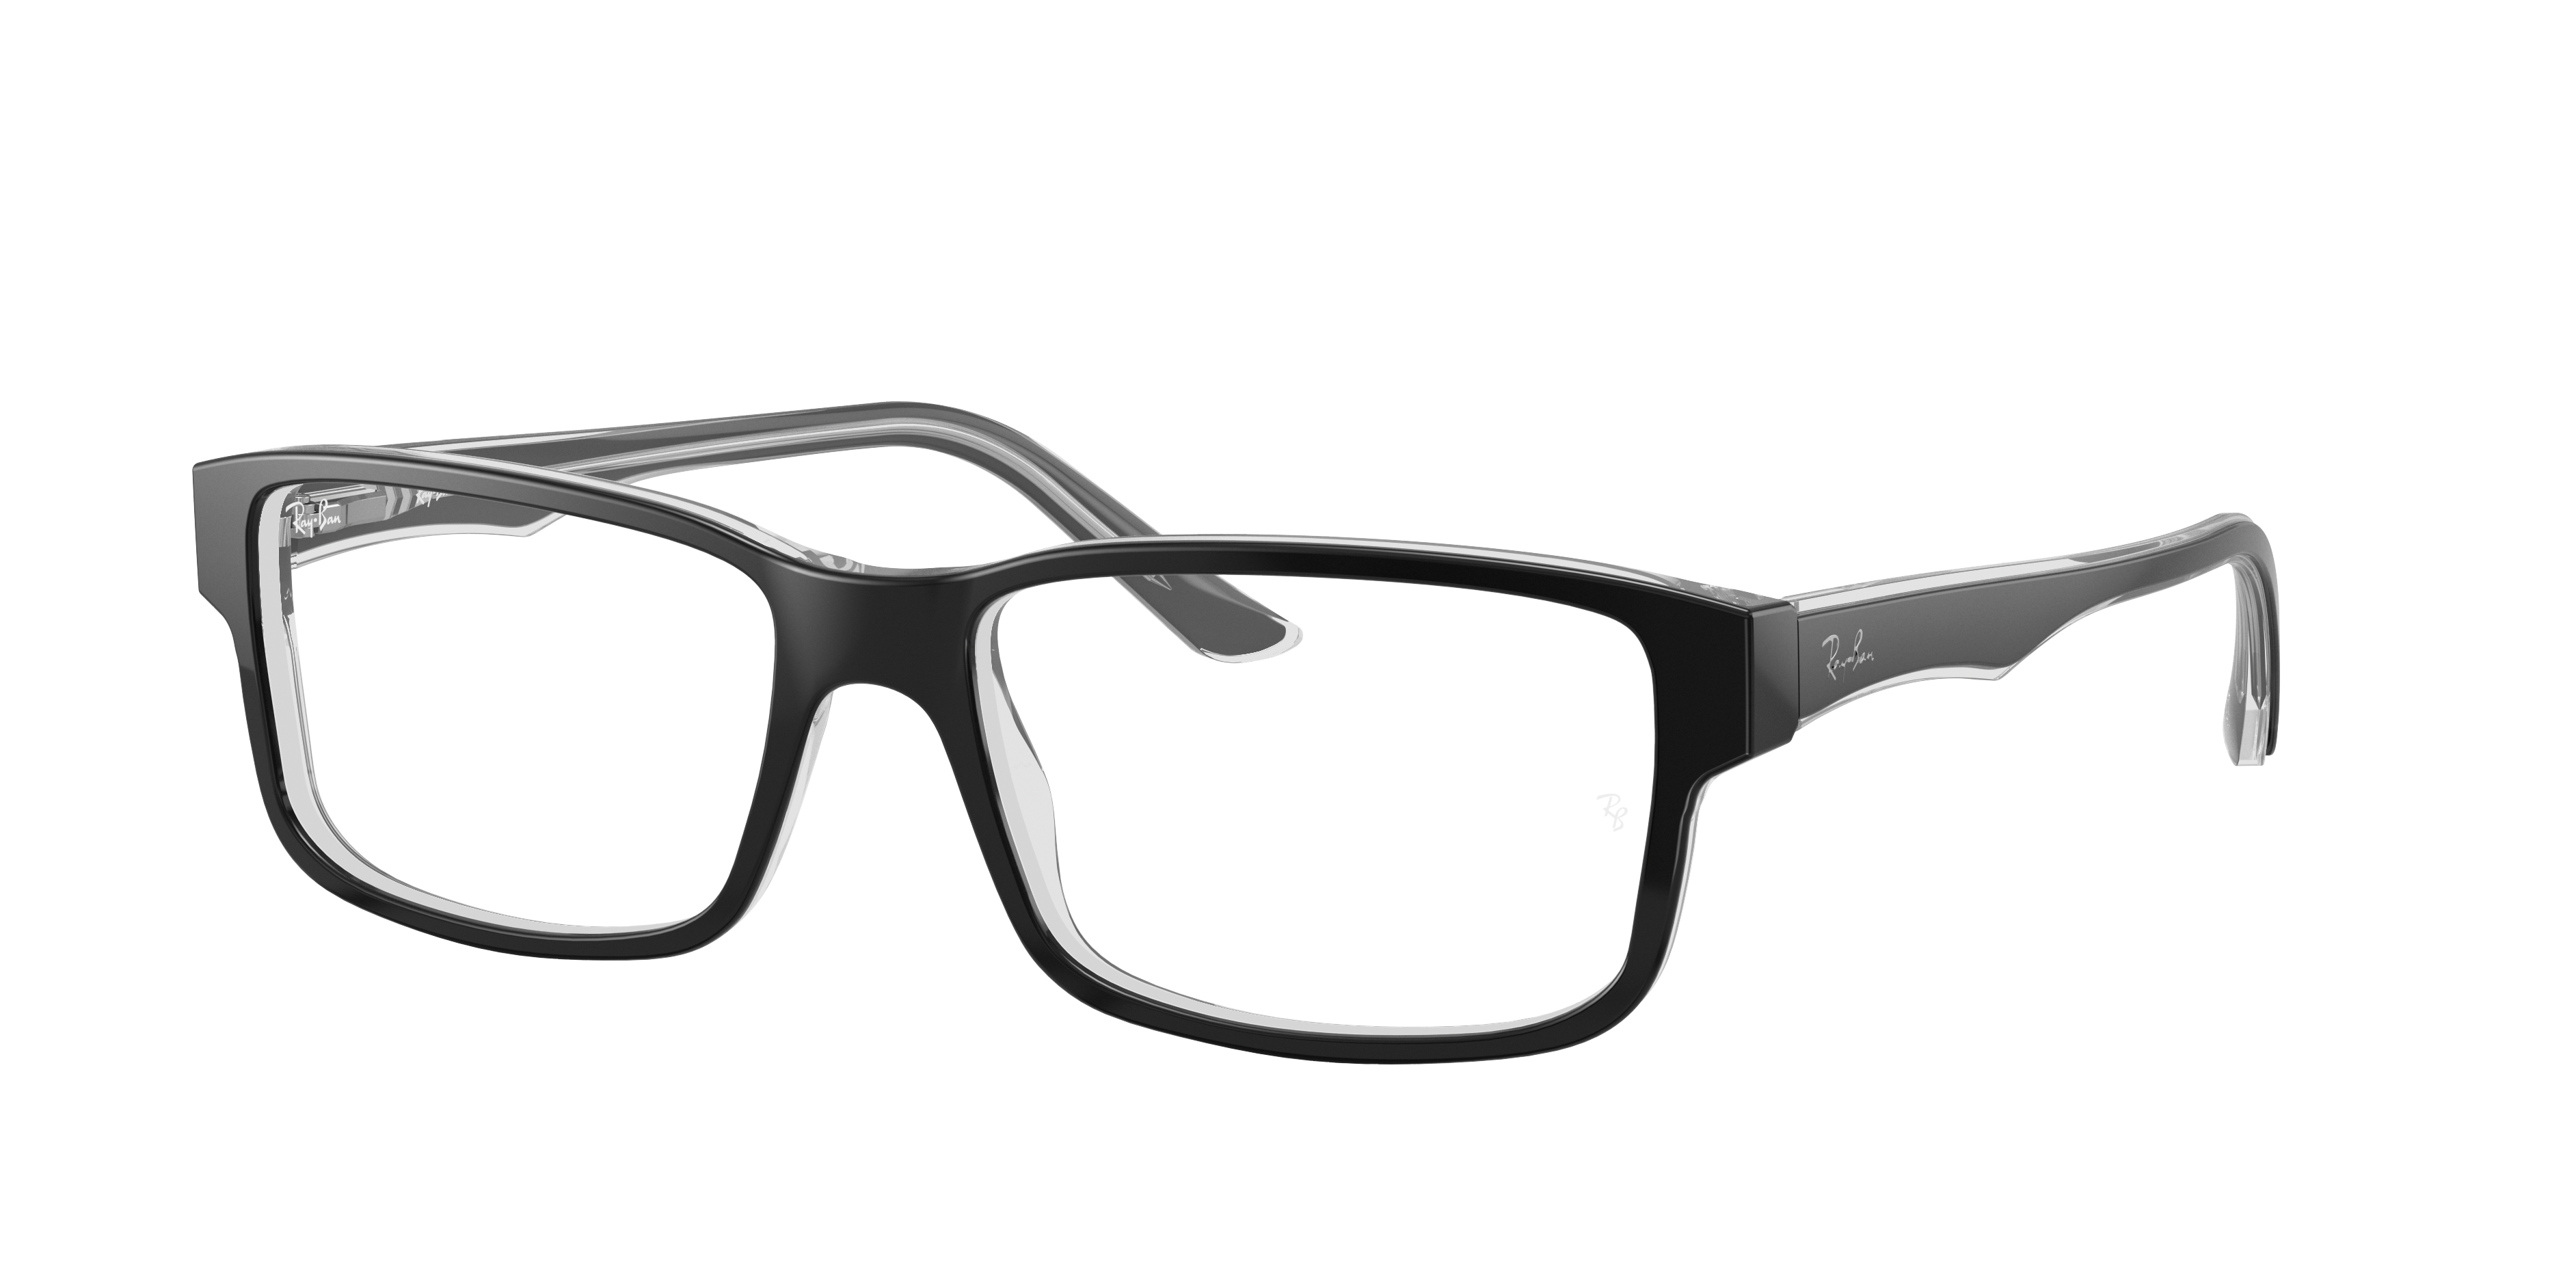 ray ban mens glasses lenscrafters